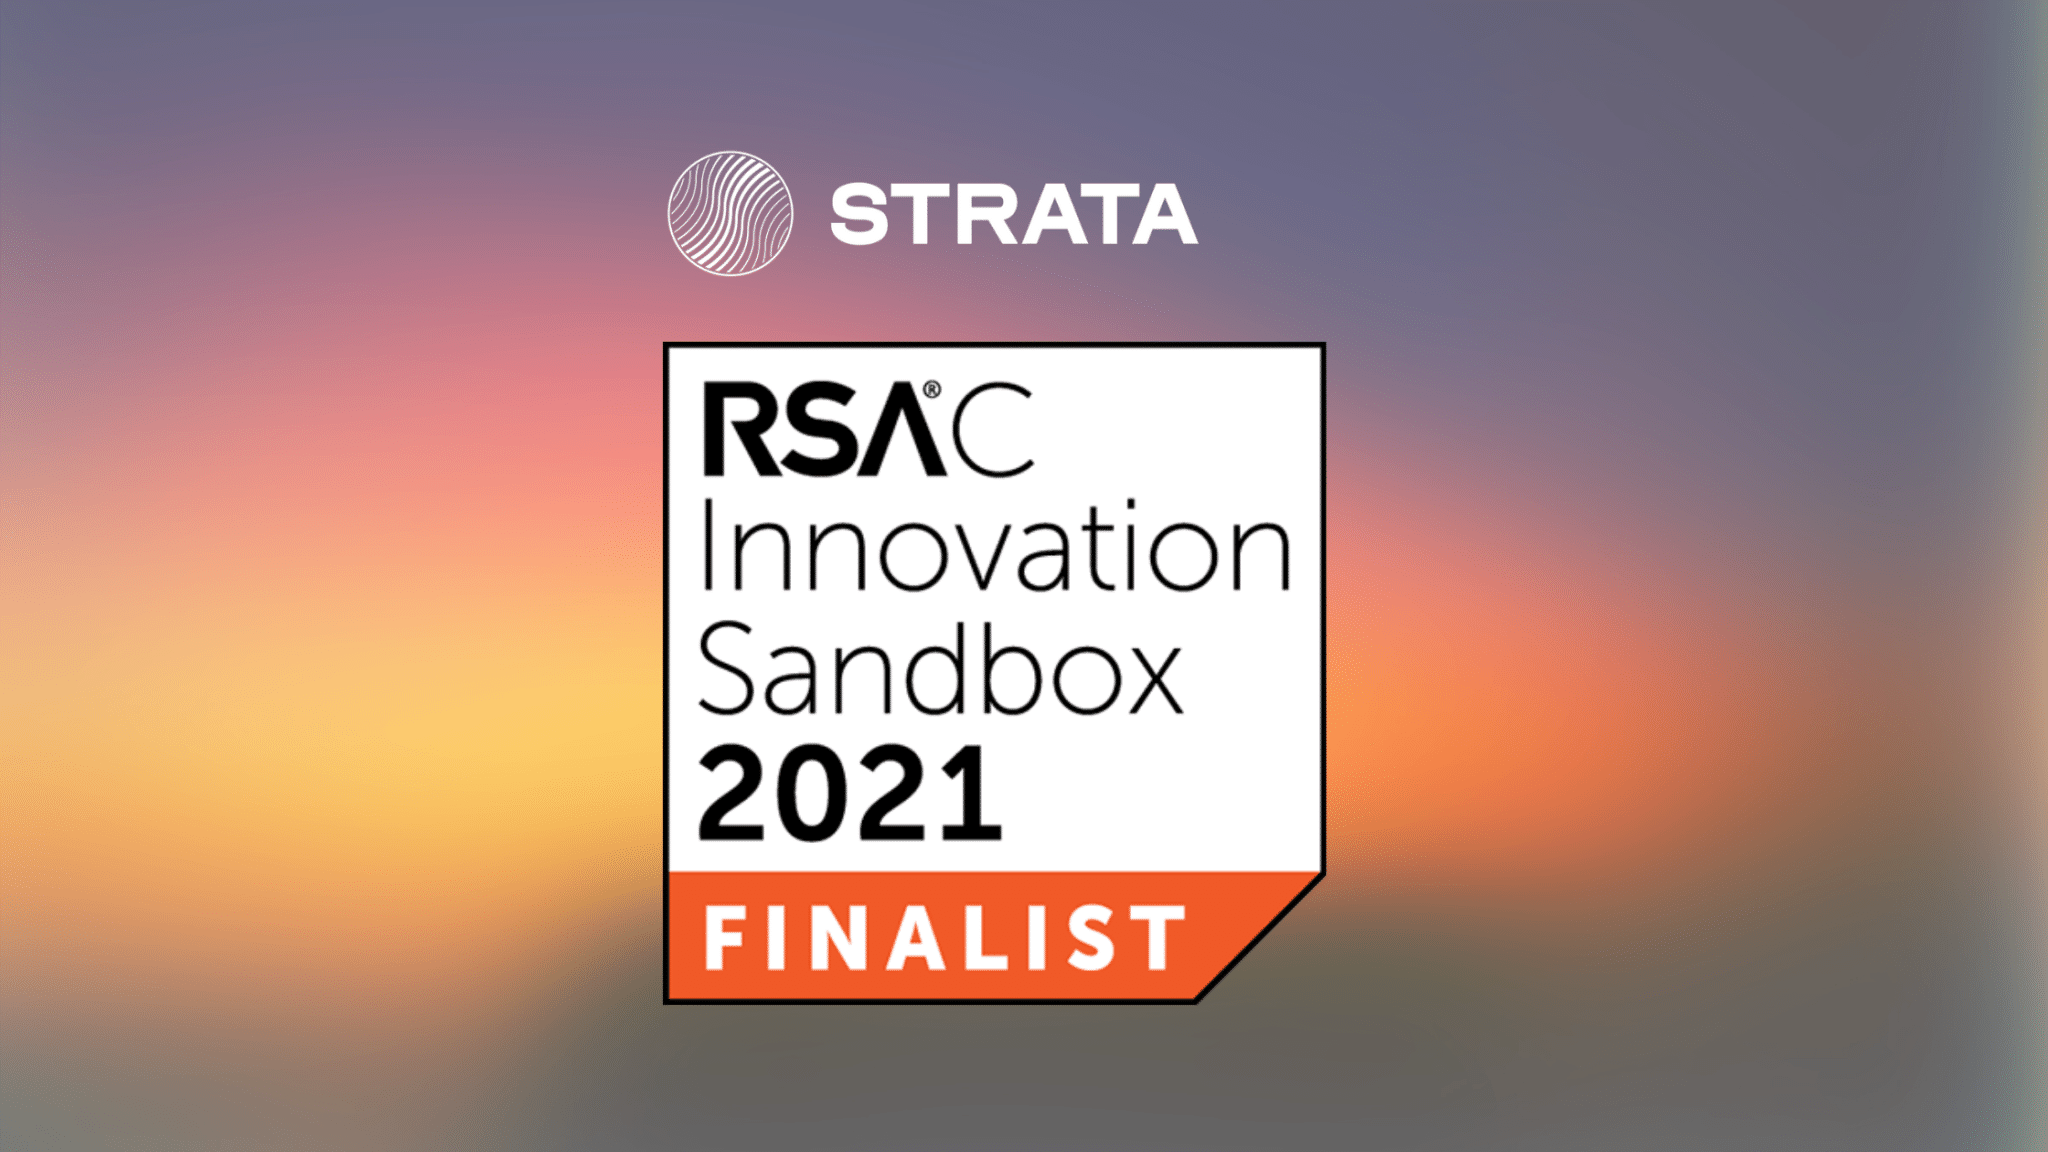 Strata RSA Innovation Sandbox 2021 Finalist Logo Banner